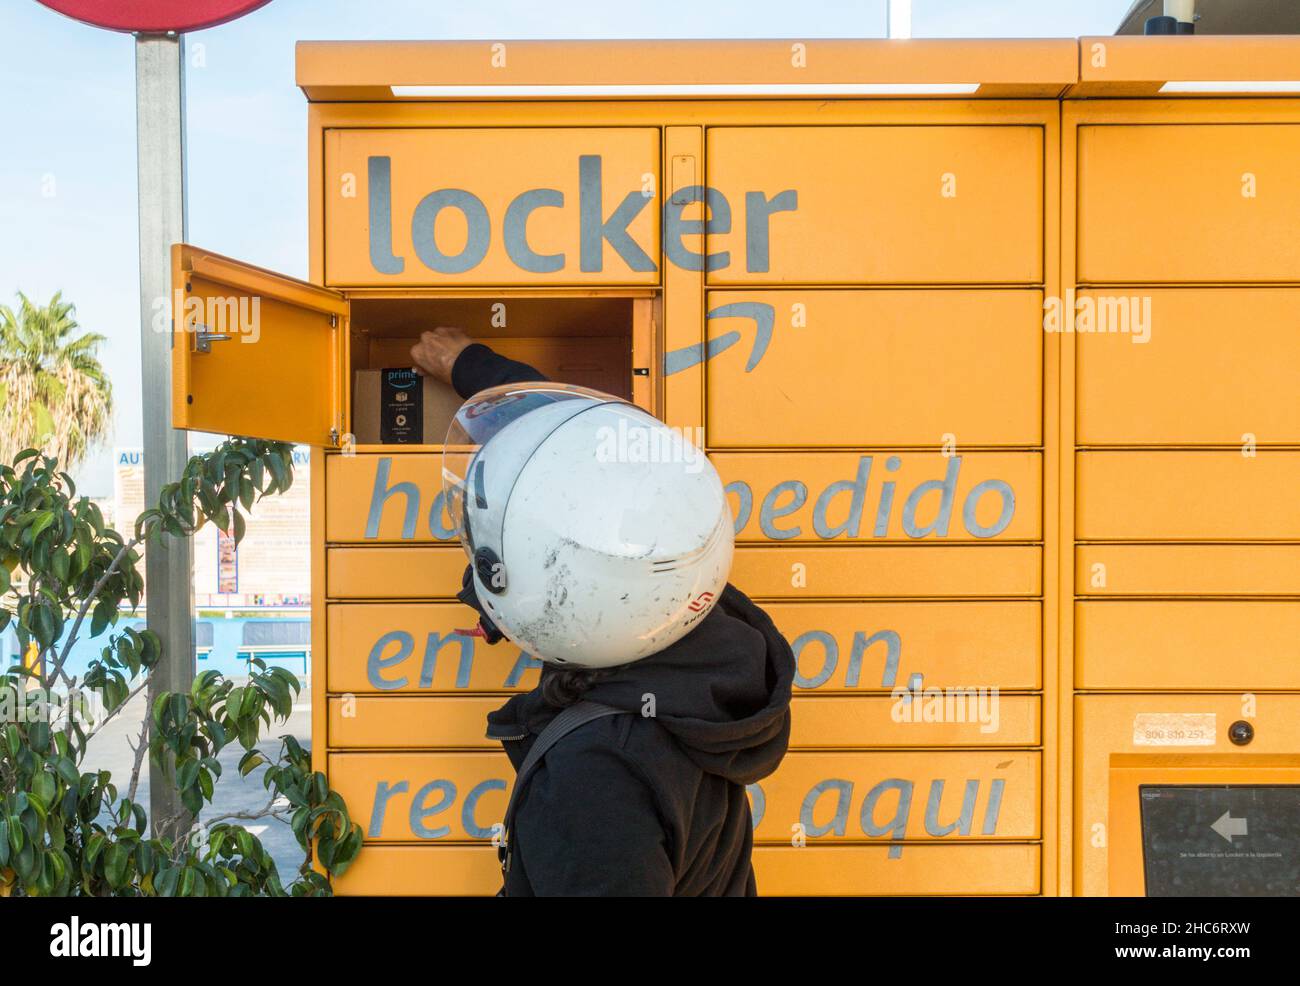 Amazon locker, Liefersystem, Frau, die Paket abholt, Andalusien, Spanien. Stockfoto